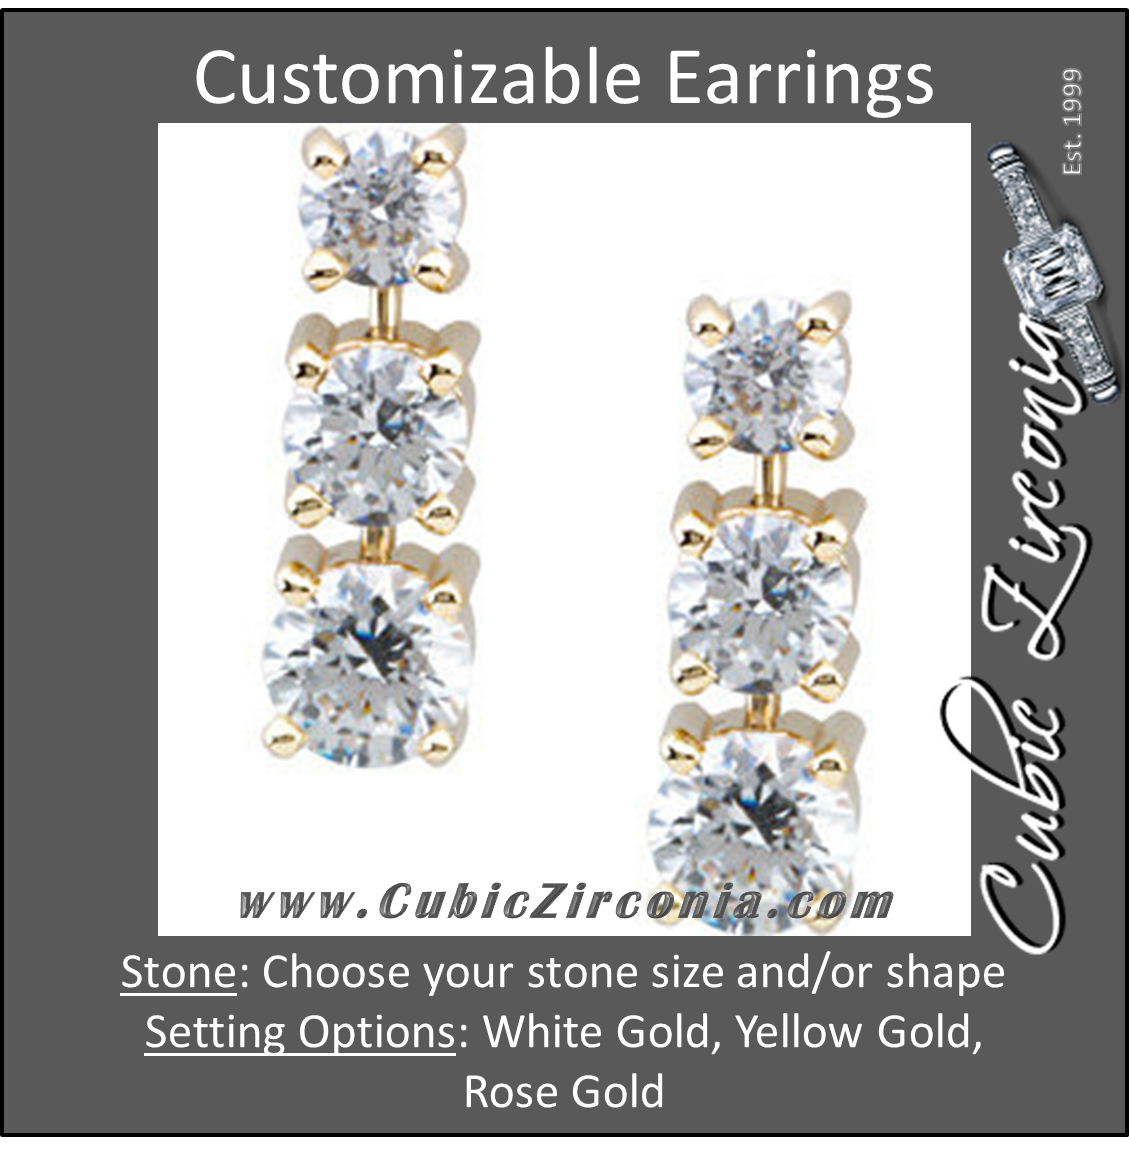 Cubic Zirconia Earrings- Customizable 3-Stone Graduated Round Cut Dangle Earring Set